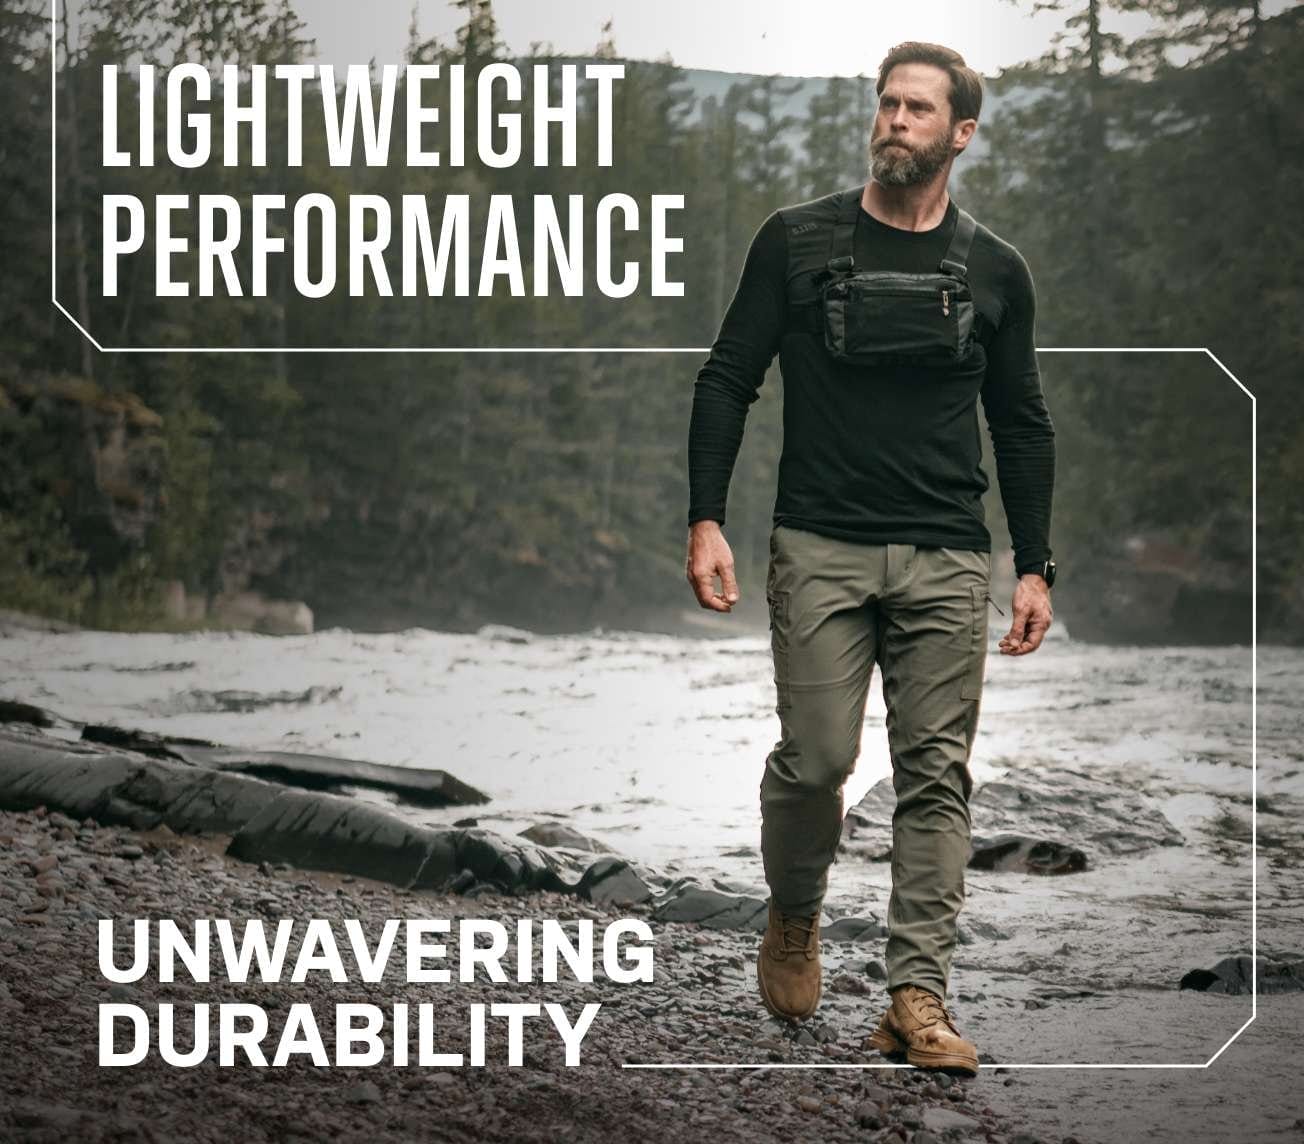 Lightweight performance, unwavering durability